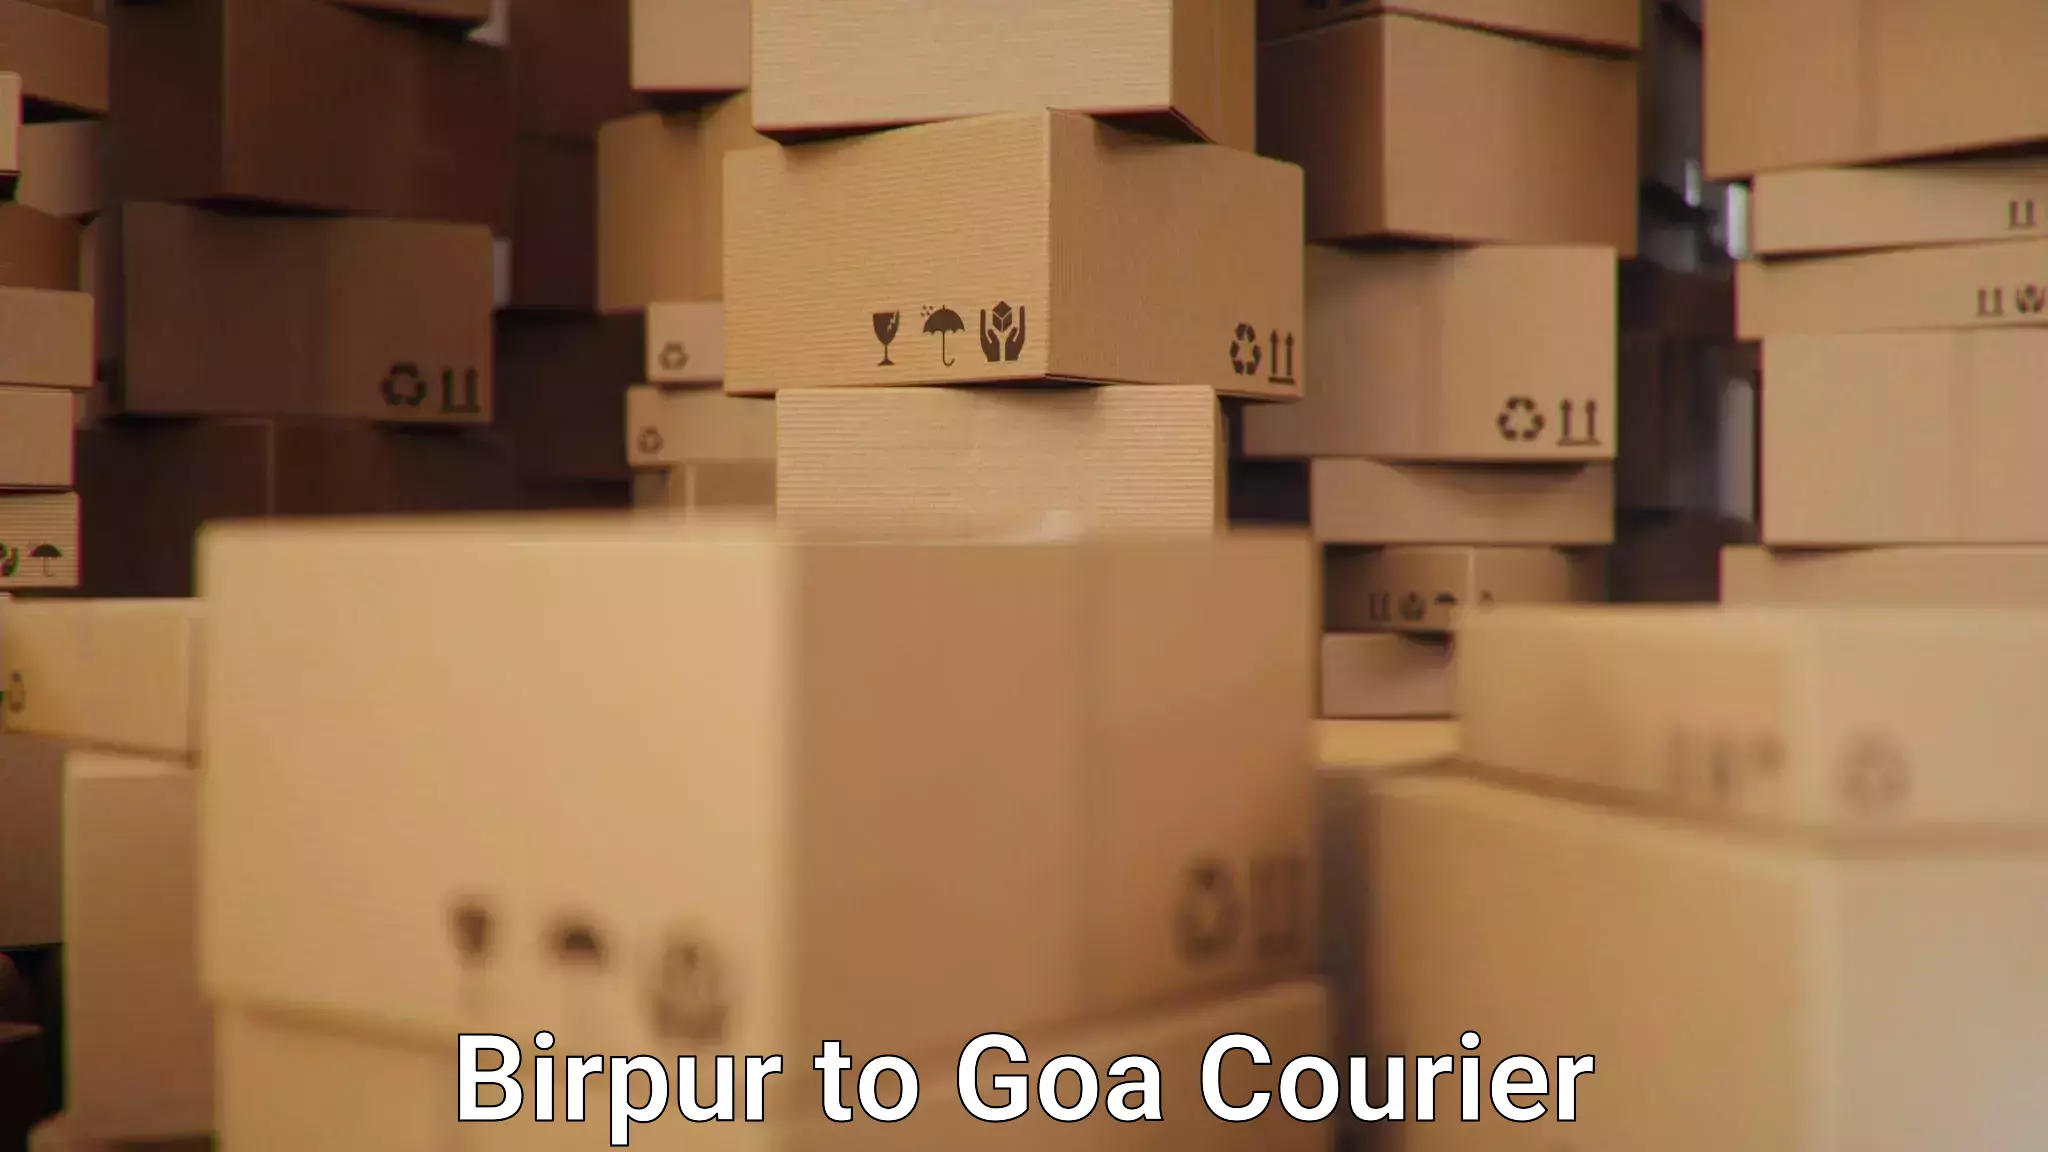 Global shipping networks Birpur to Goa